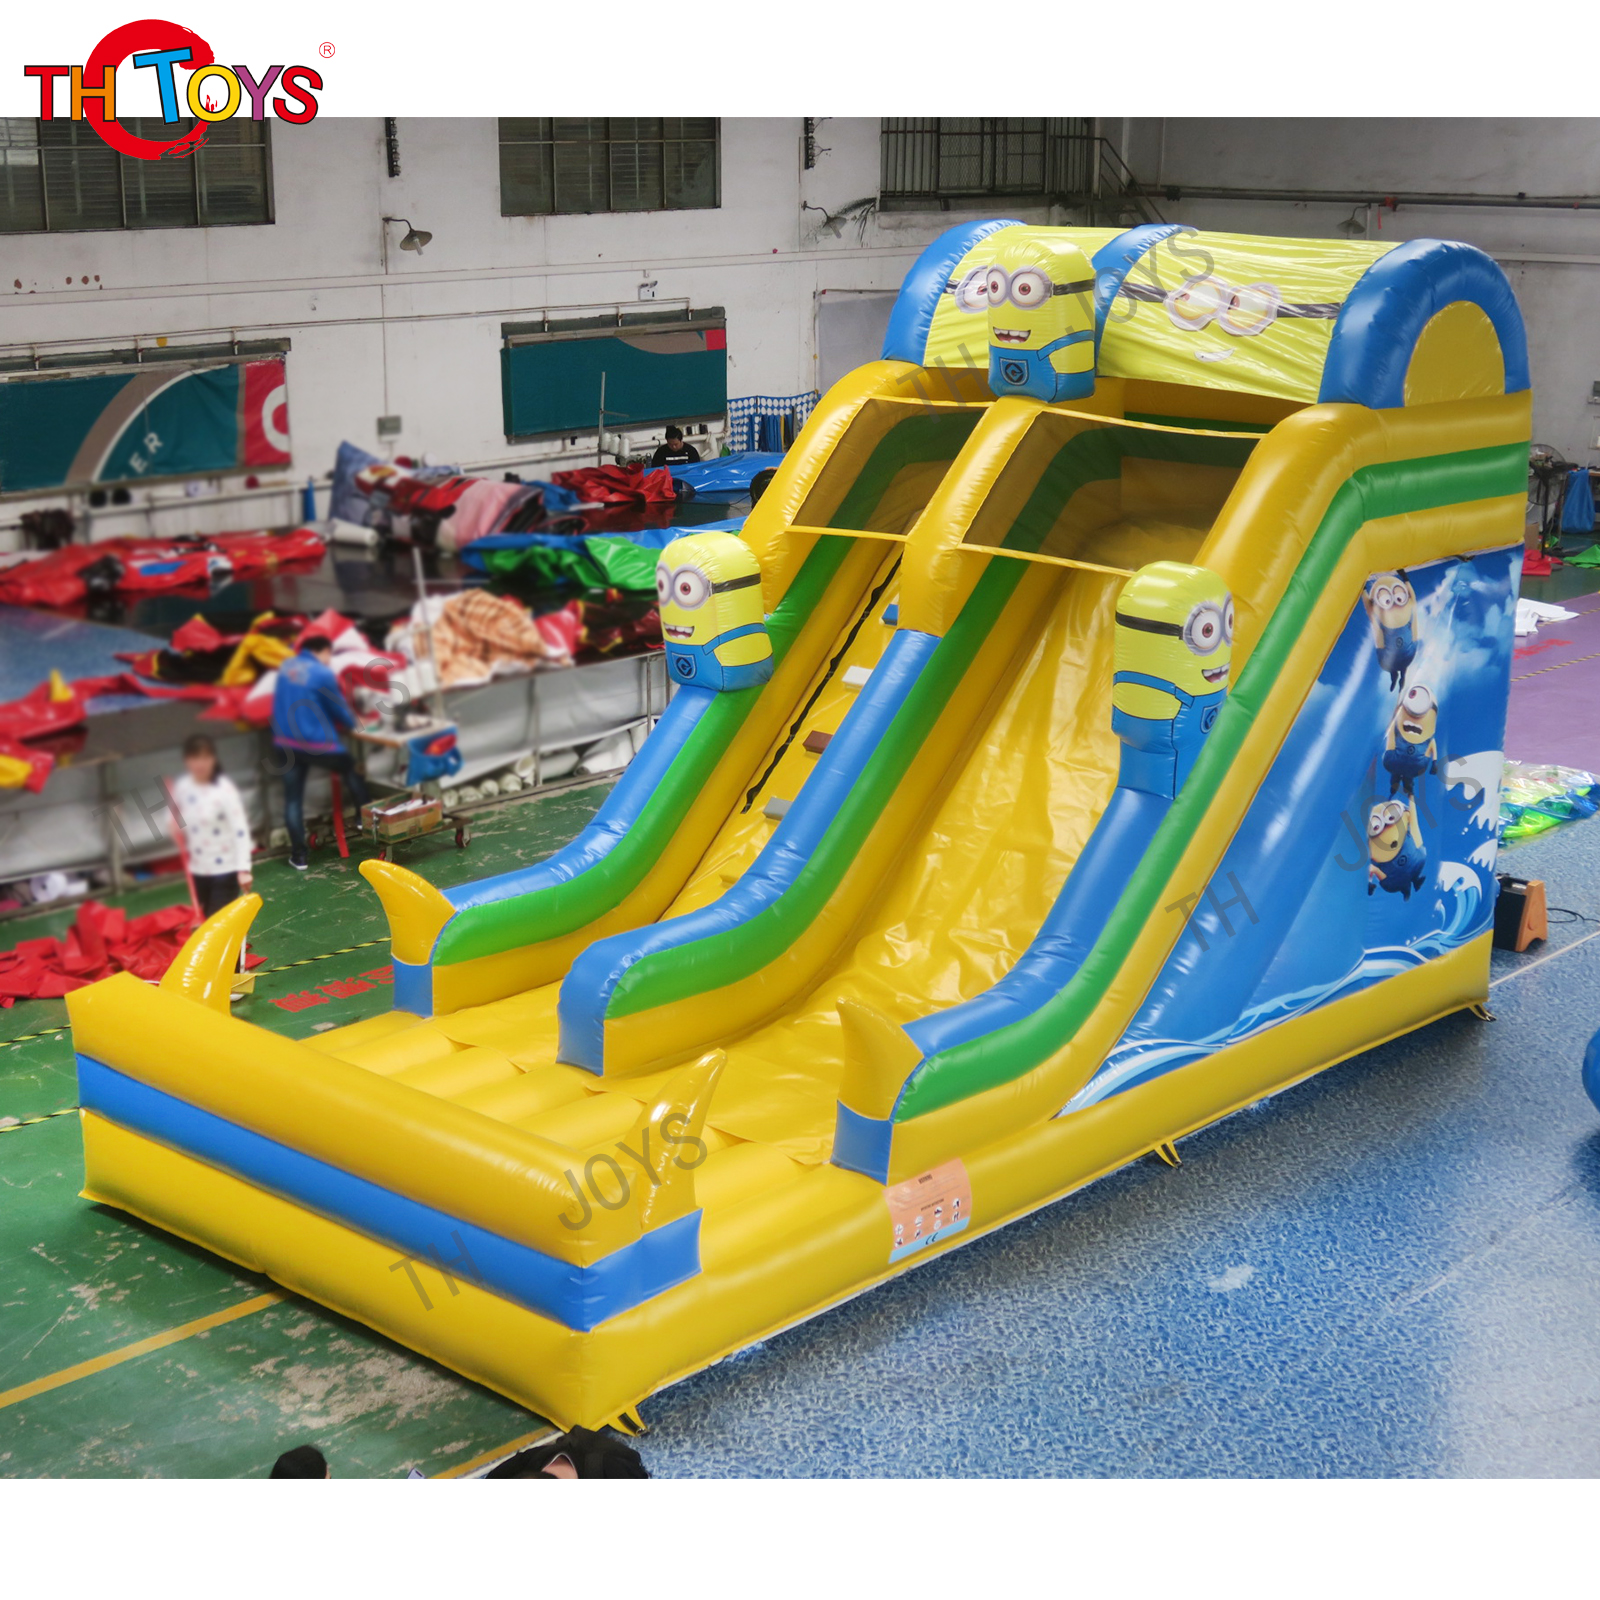 Inflatable slide-39